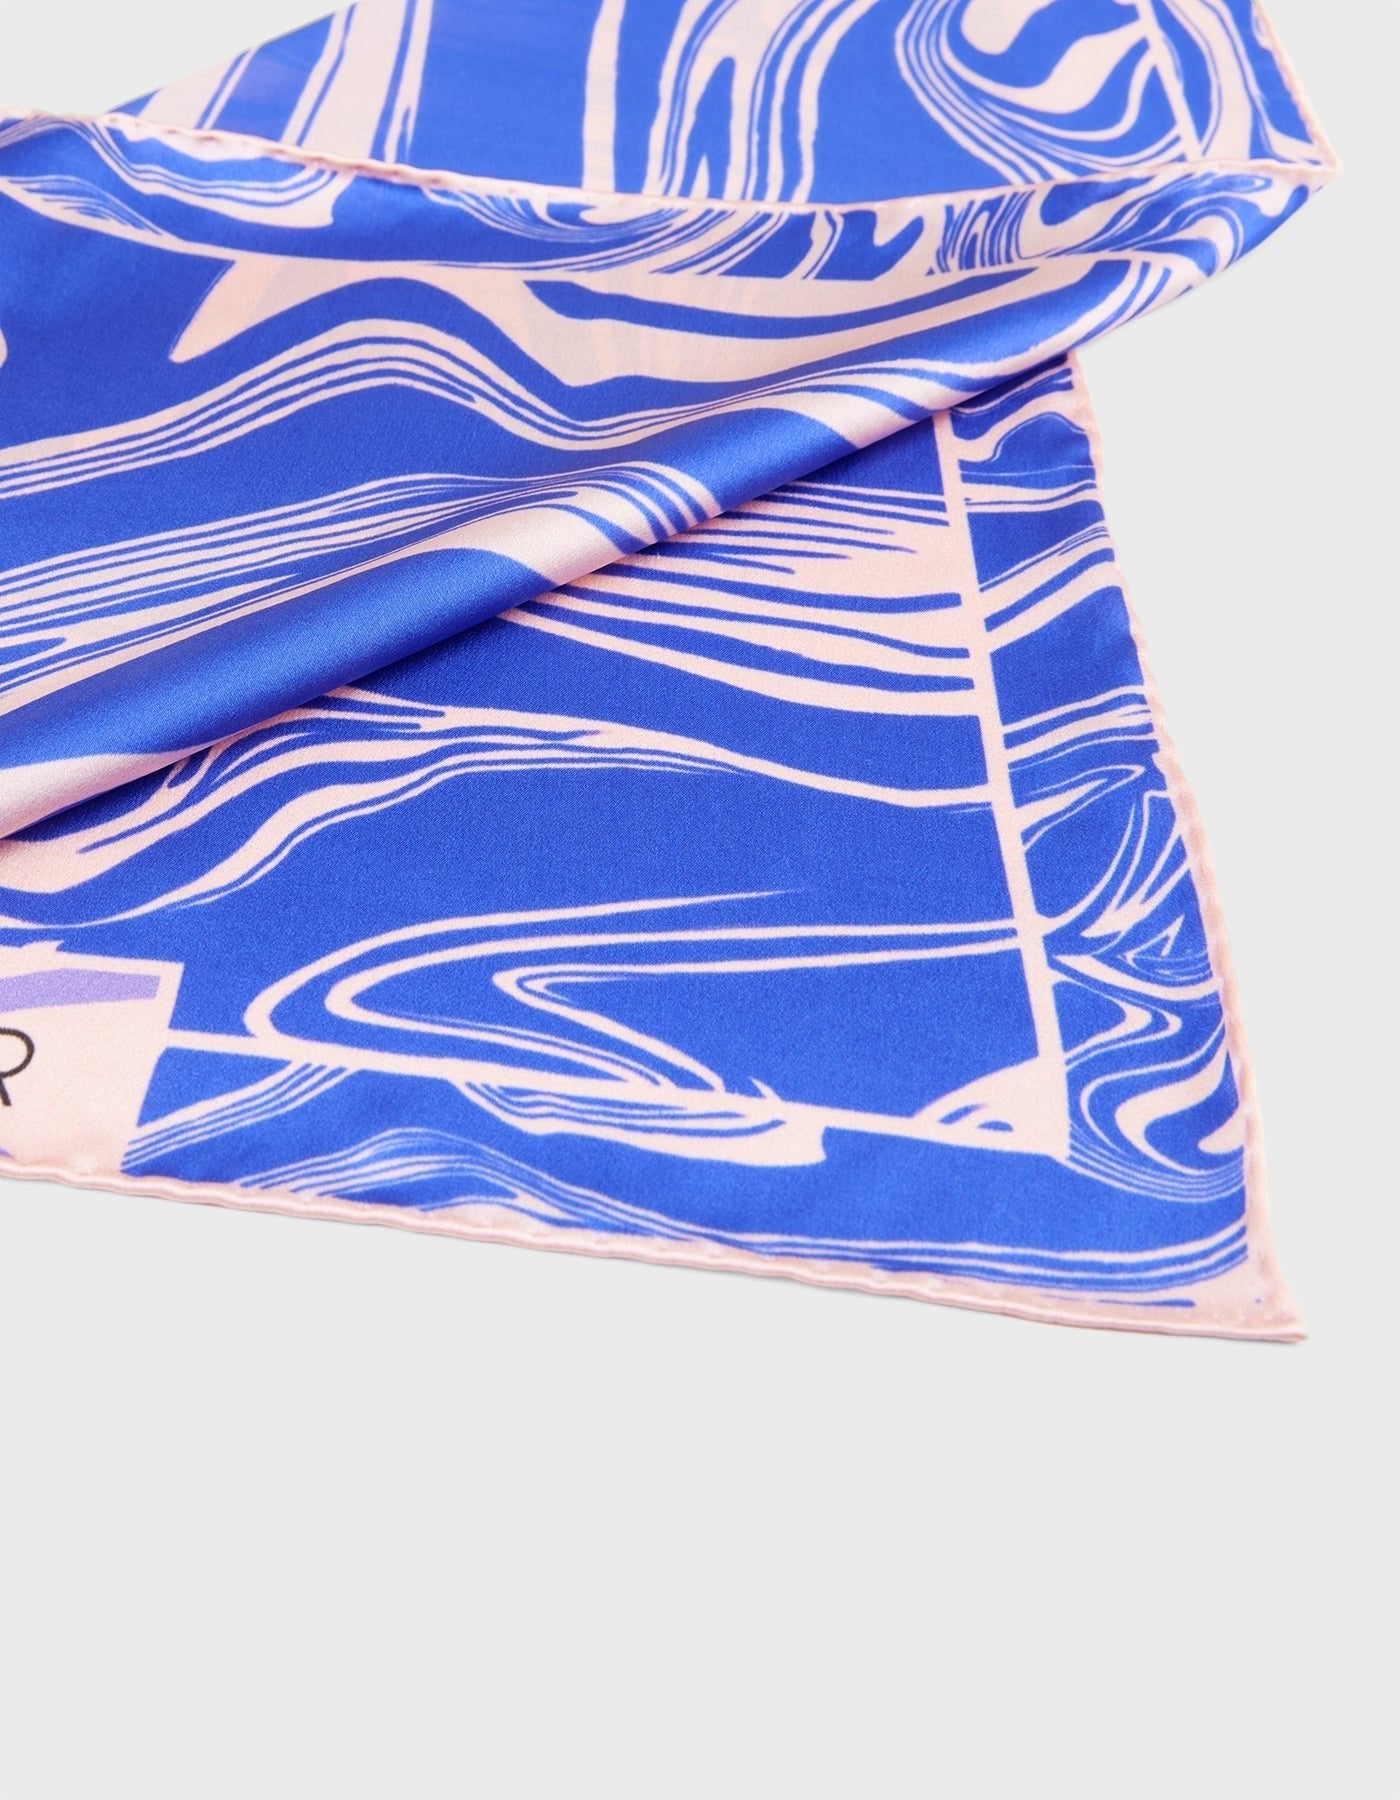 HiVa Atelier | HiVa Silk Scarf 50 X 50 CM Blocking Wave - Sodalite Blue & Pink Clay | Beautiful and Versatile